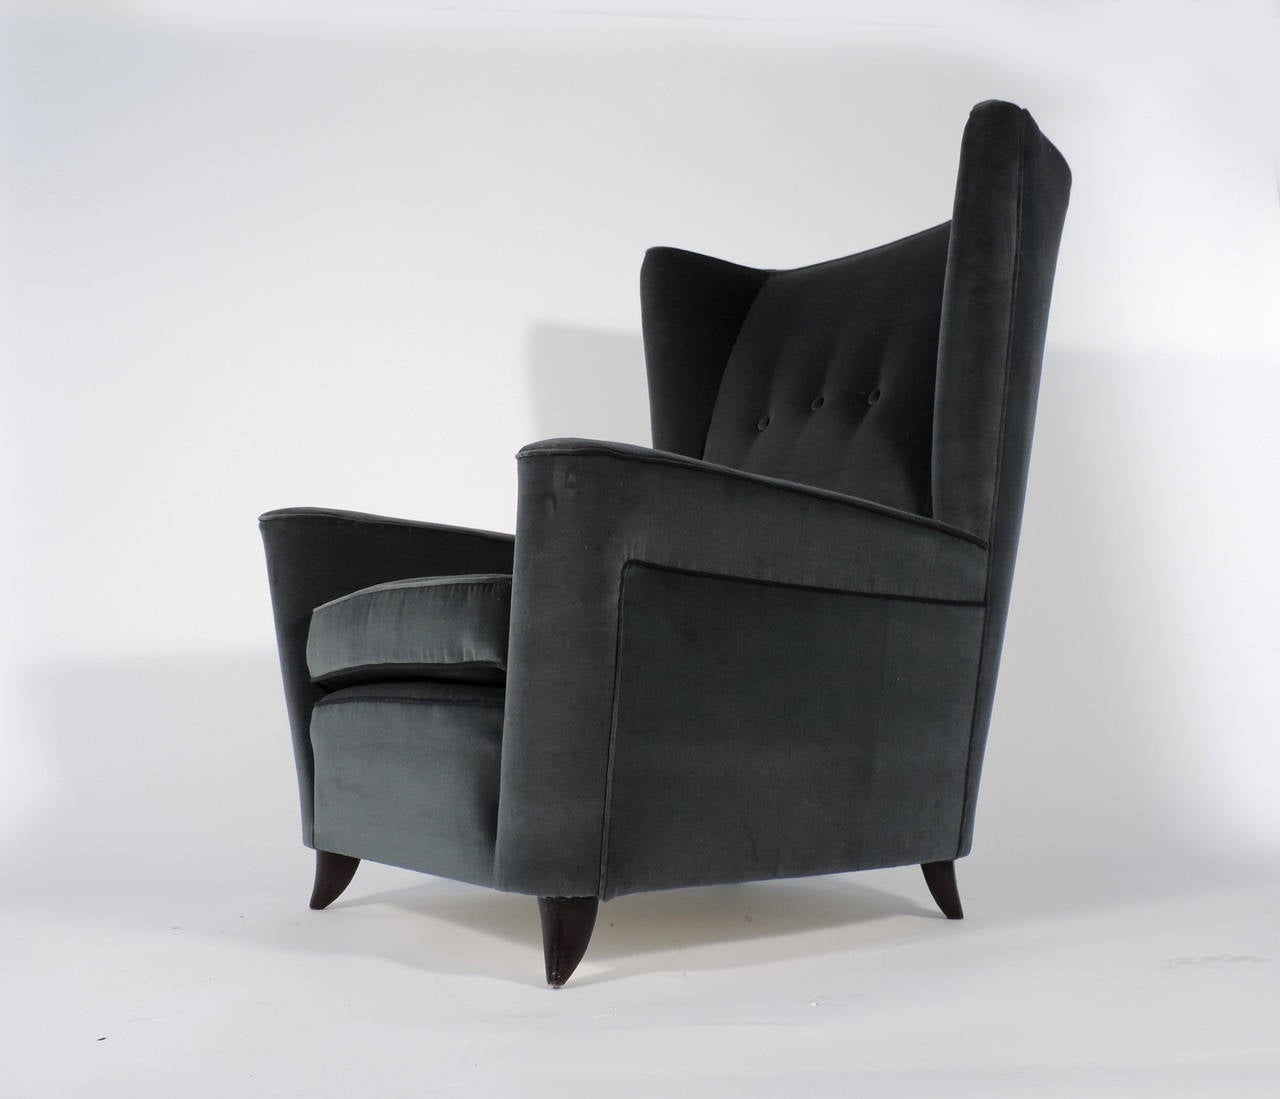 A splendid Paolo Buffa armchair